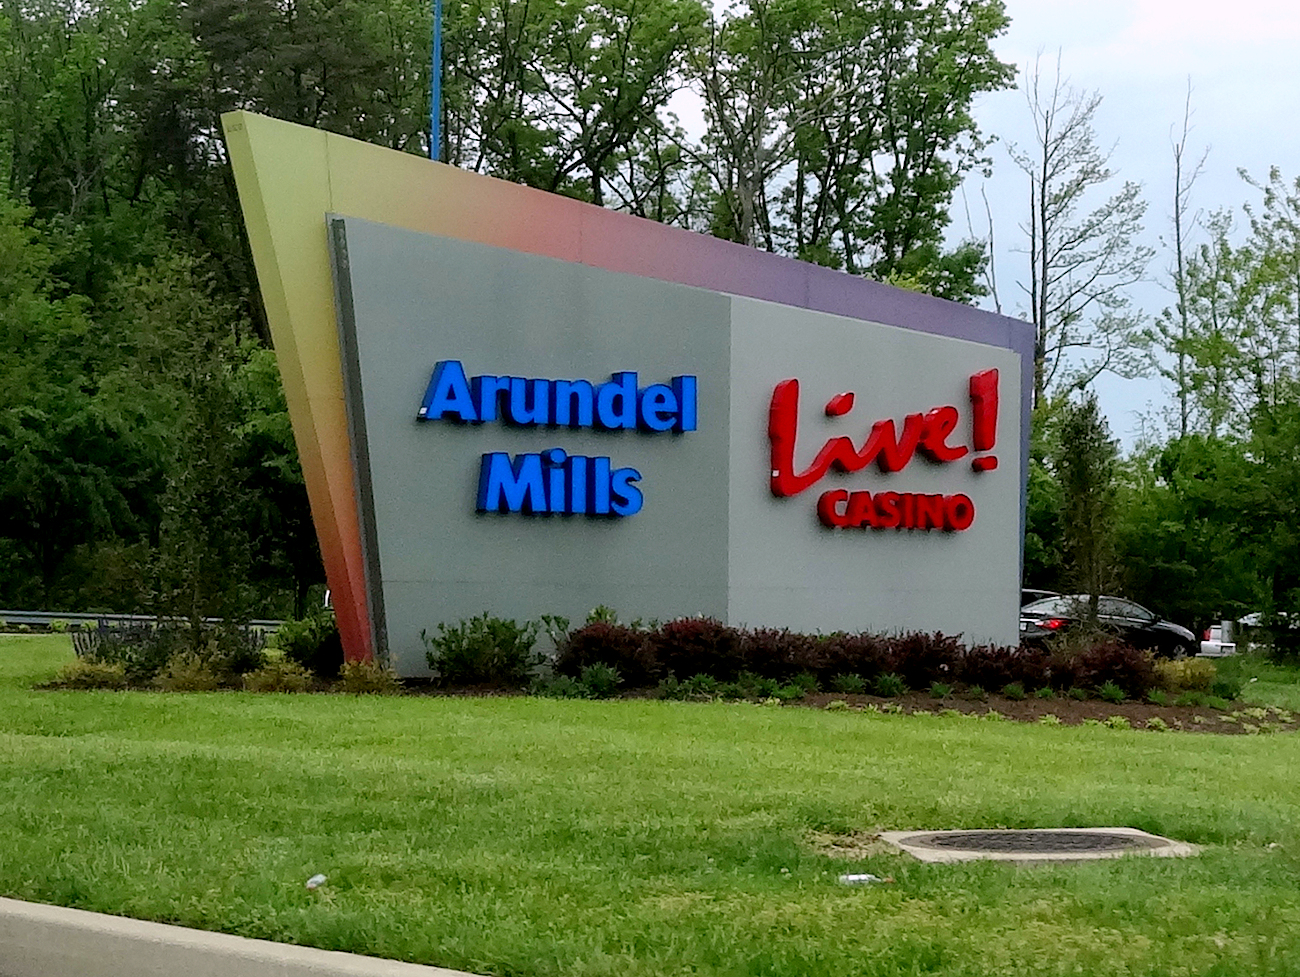 Arundel mills mall